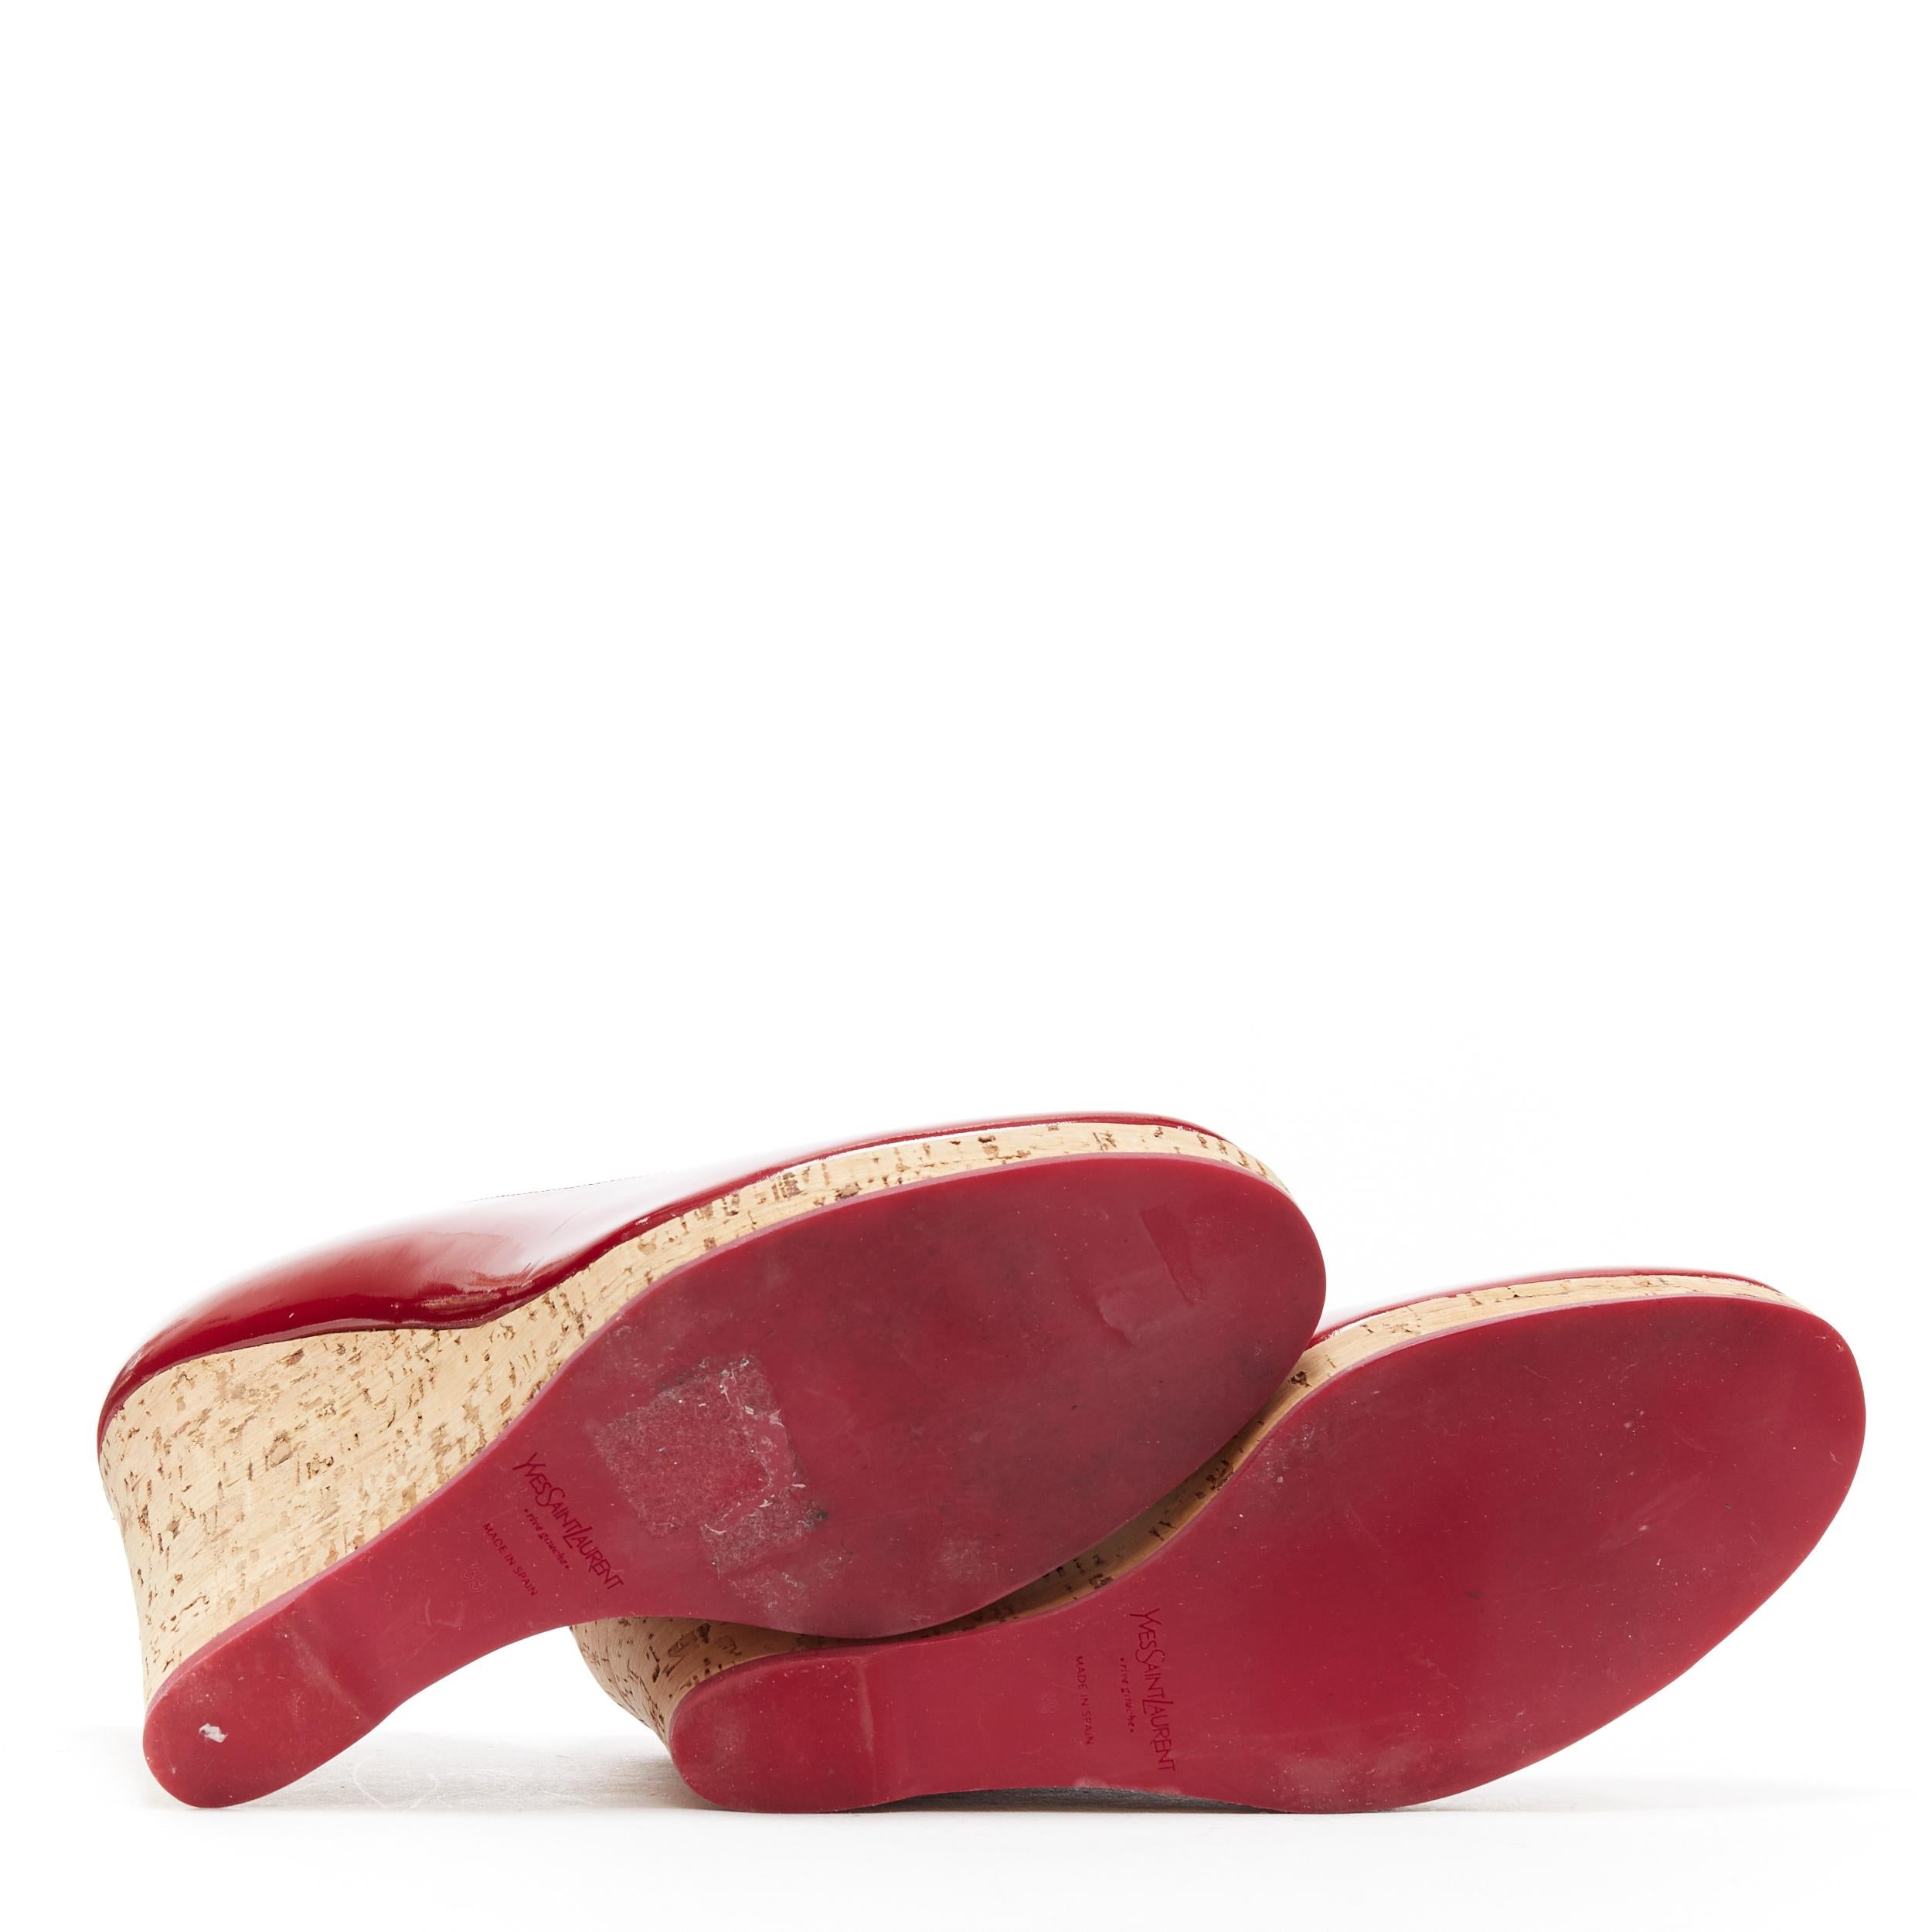 YVES SAINT LAURENT YSL red patent leather round toe cork wedge platform EU39 1